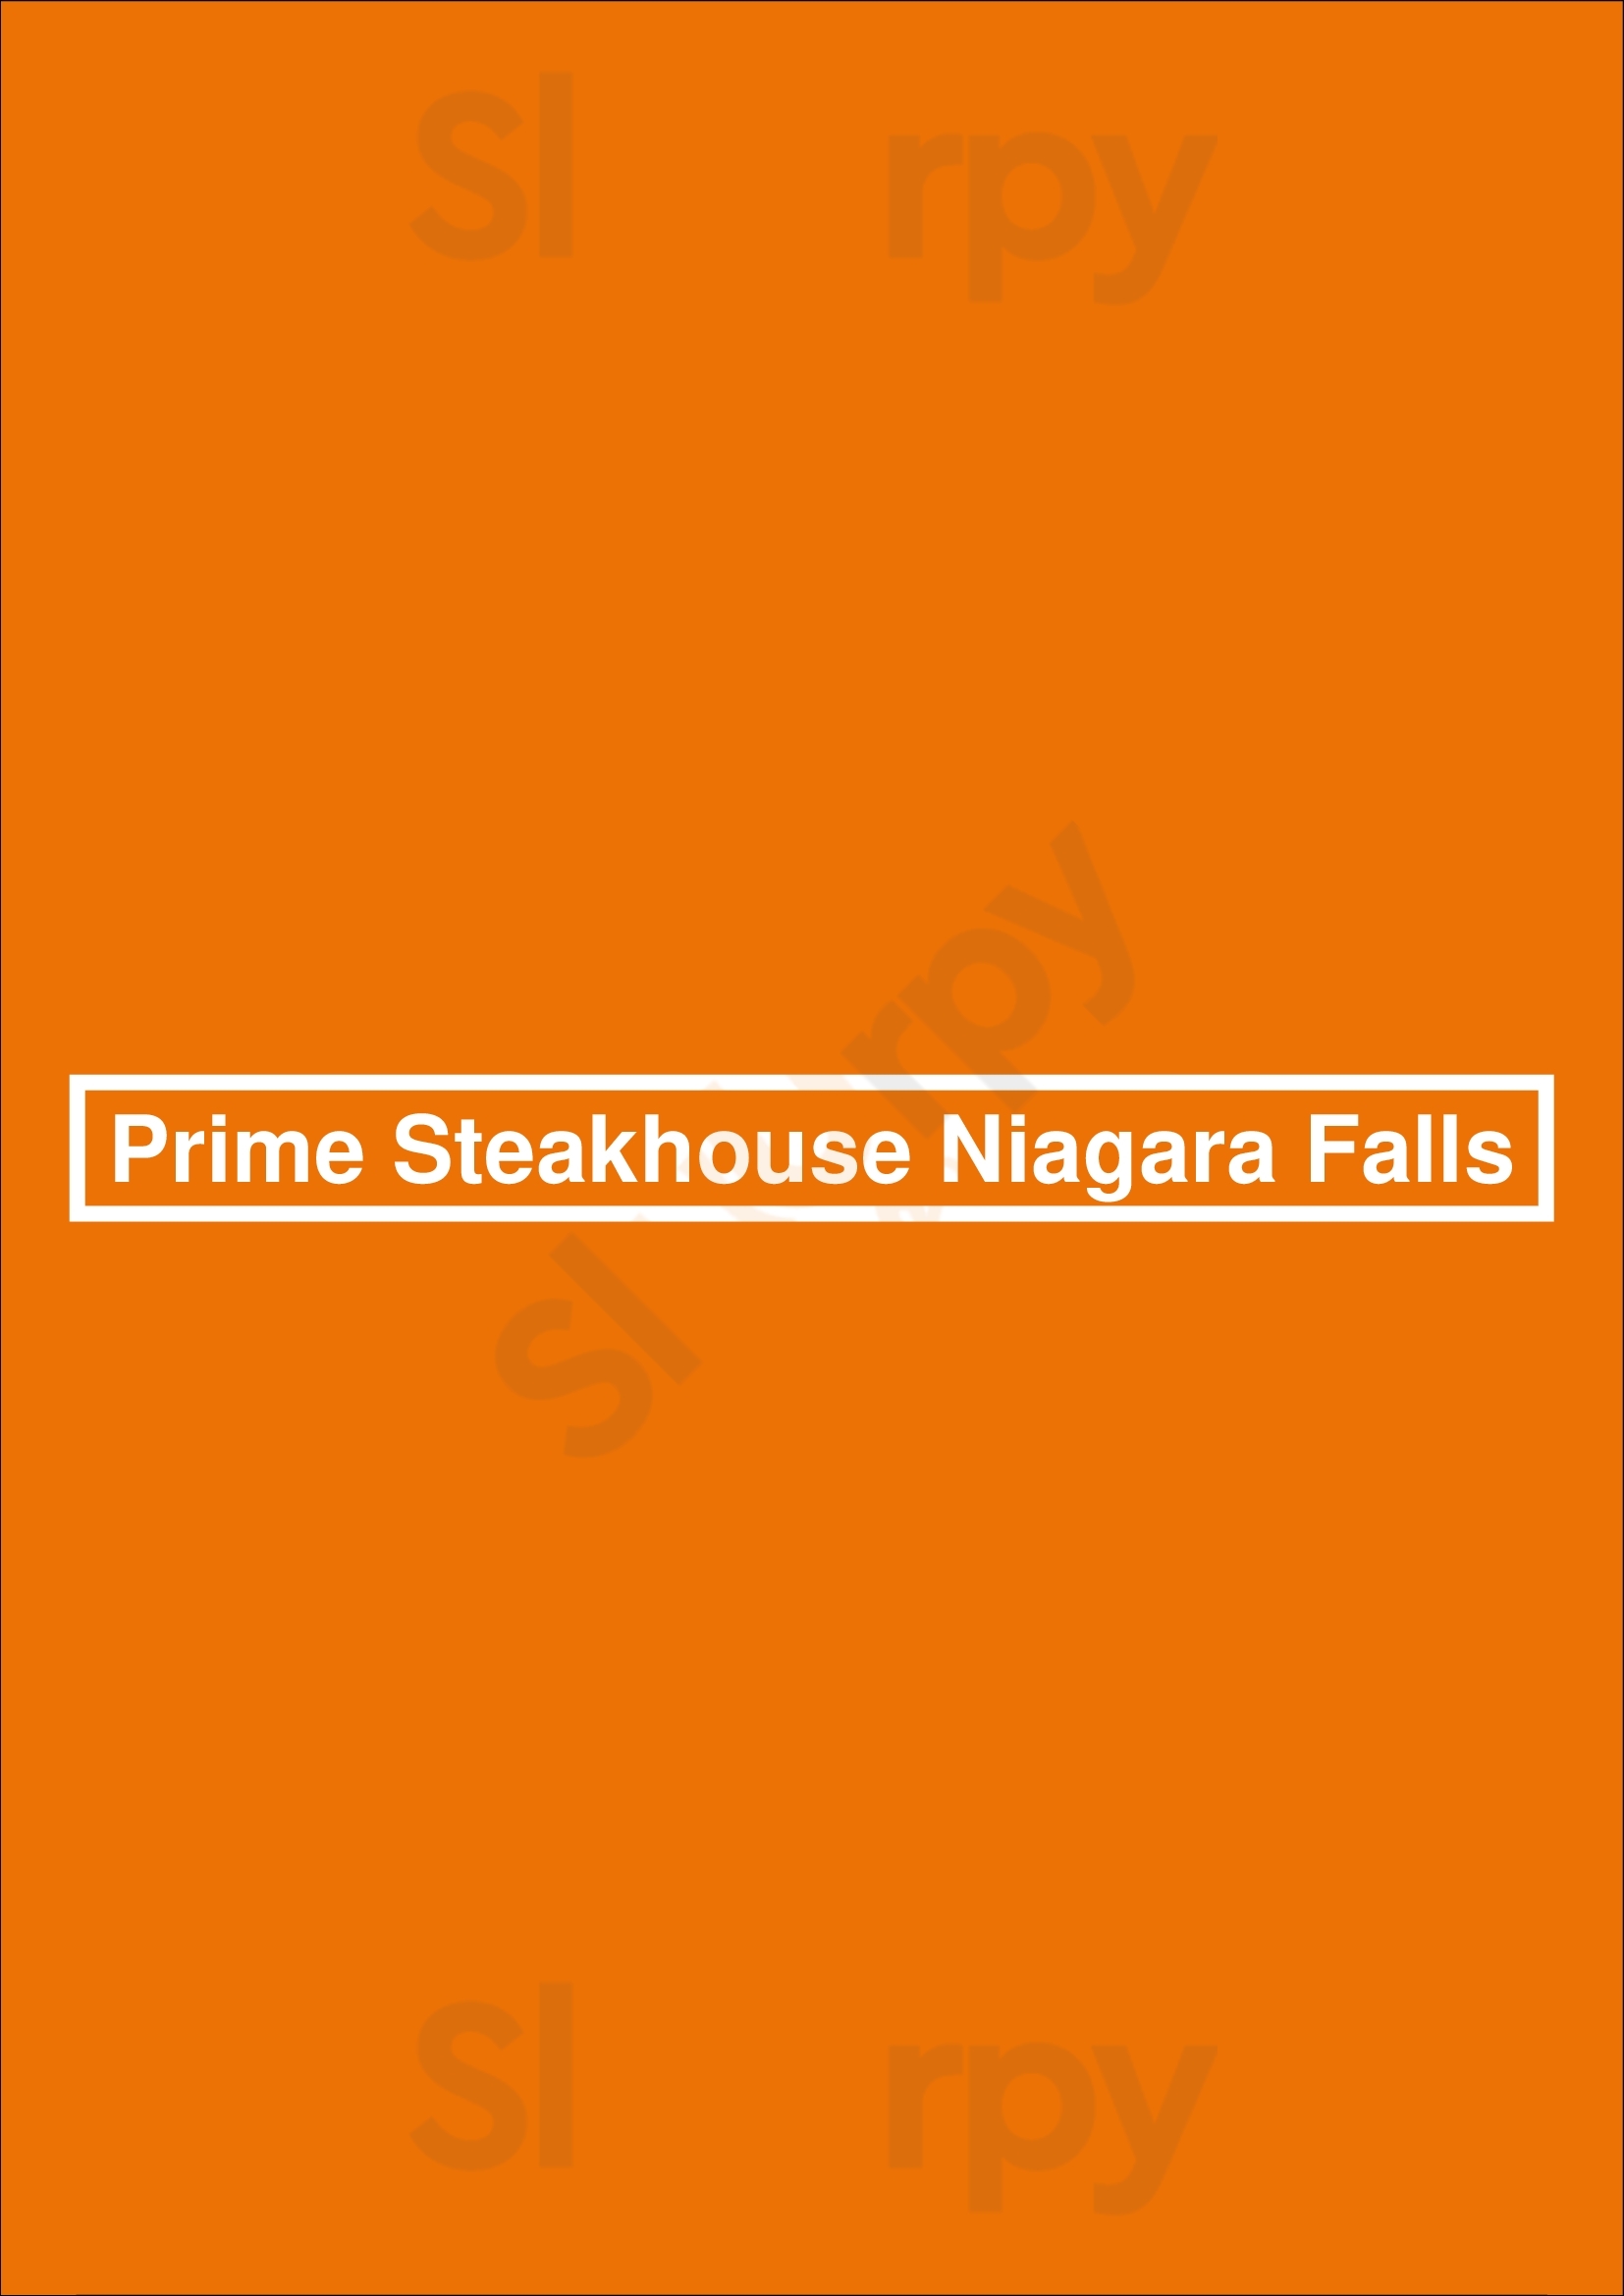 Prime Steakhouse Niagara Falls Niagara Falls Menu - 1